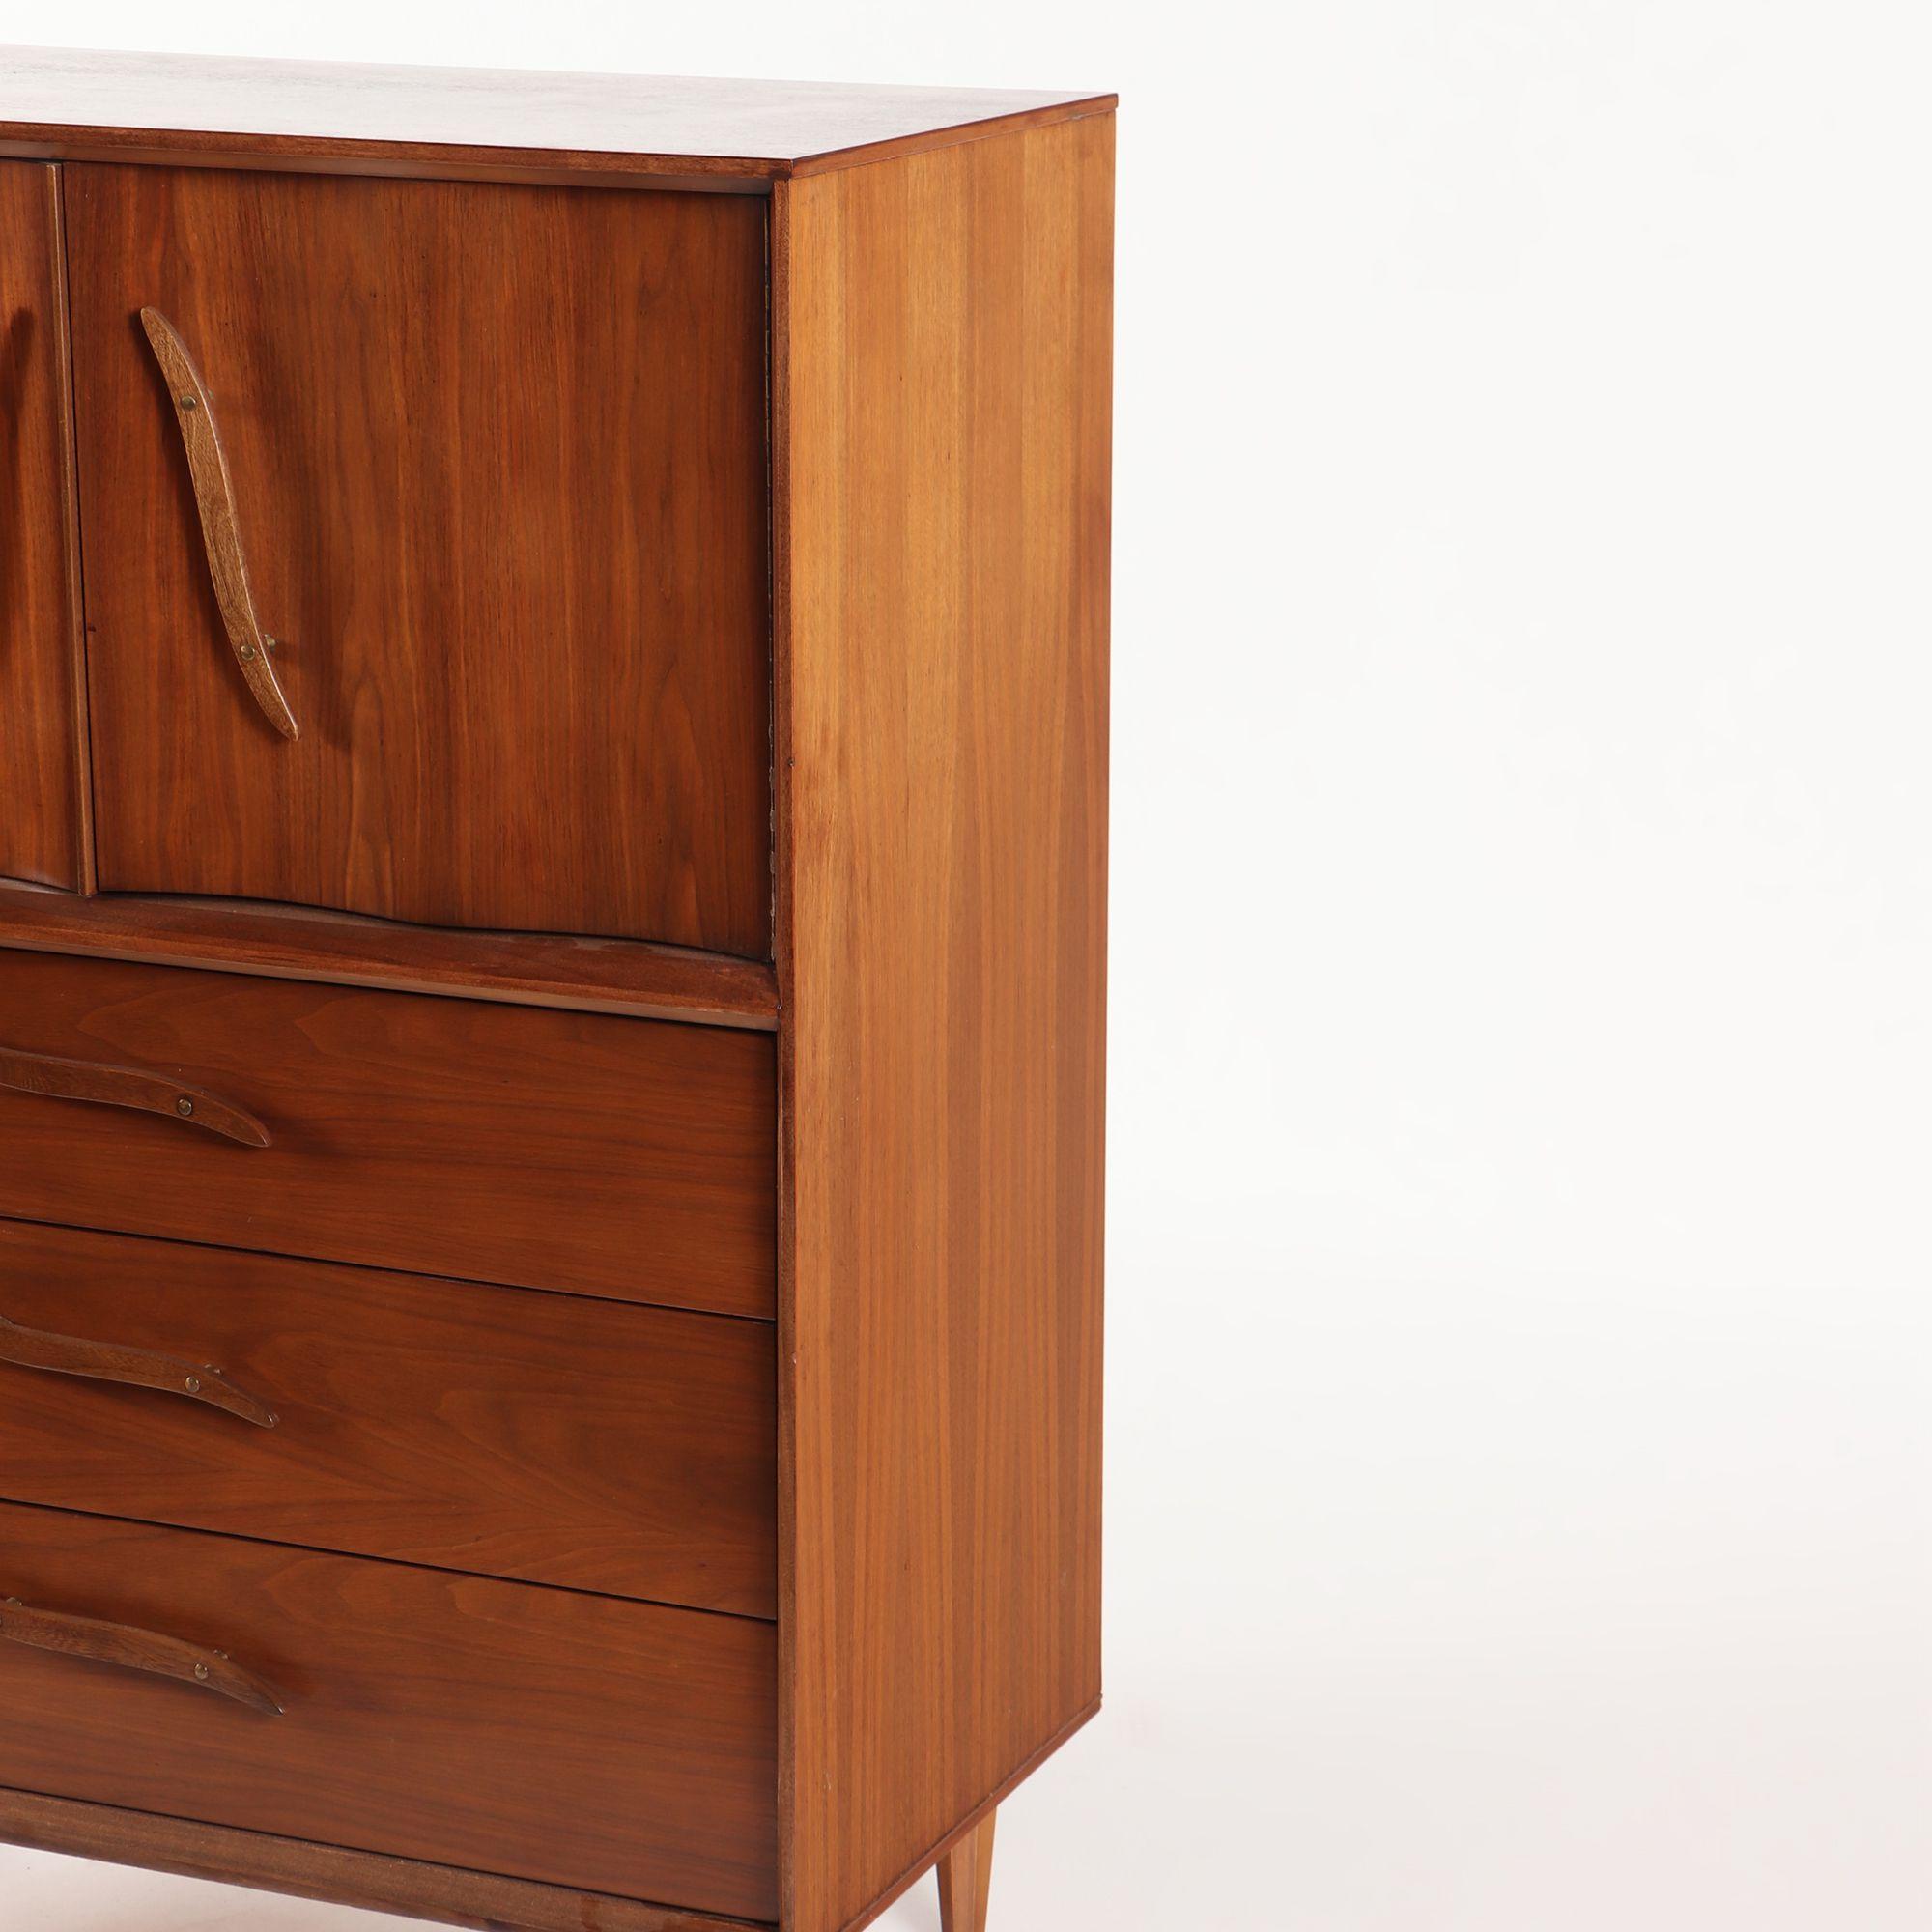 A Mid-Century Modern walnut dresser cabinet having sculptural door and drawer pulls circa 1960.